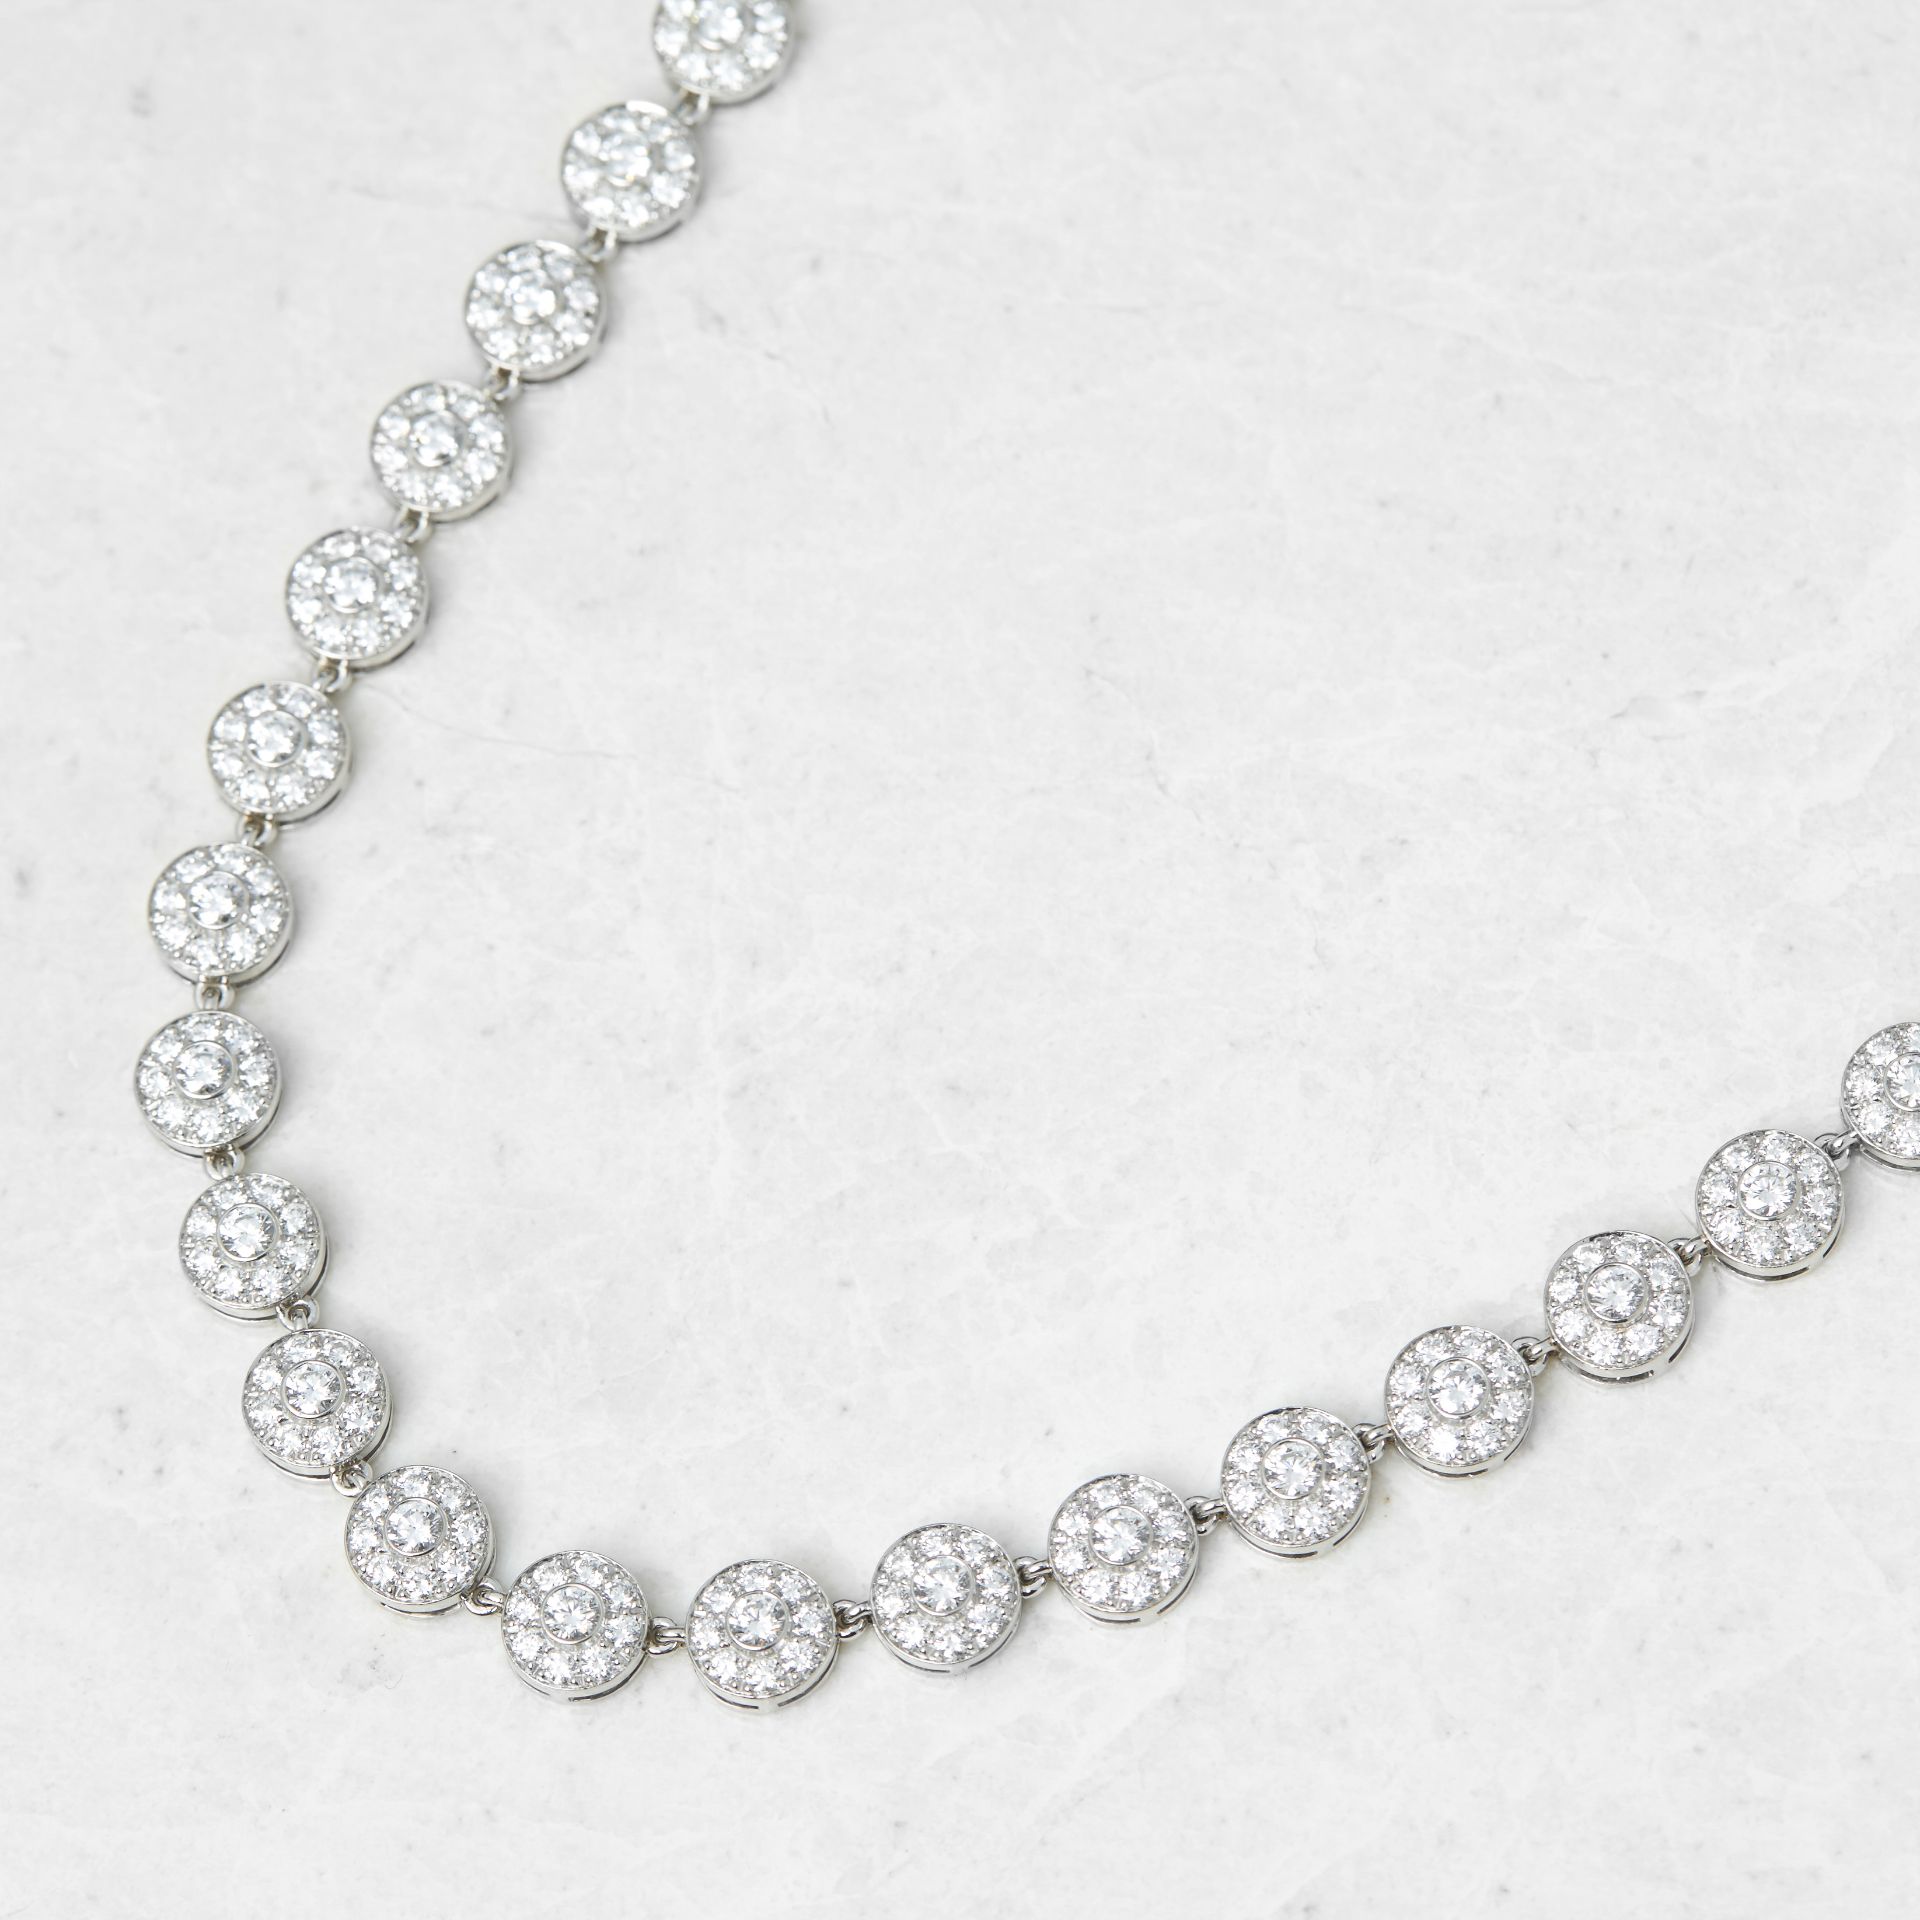 Tiffany & Co. Platinum 6.44ct Diamond Circlet Necklace with Tiffany & Co. Box - Image 7 of 14